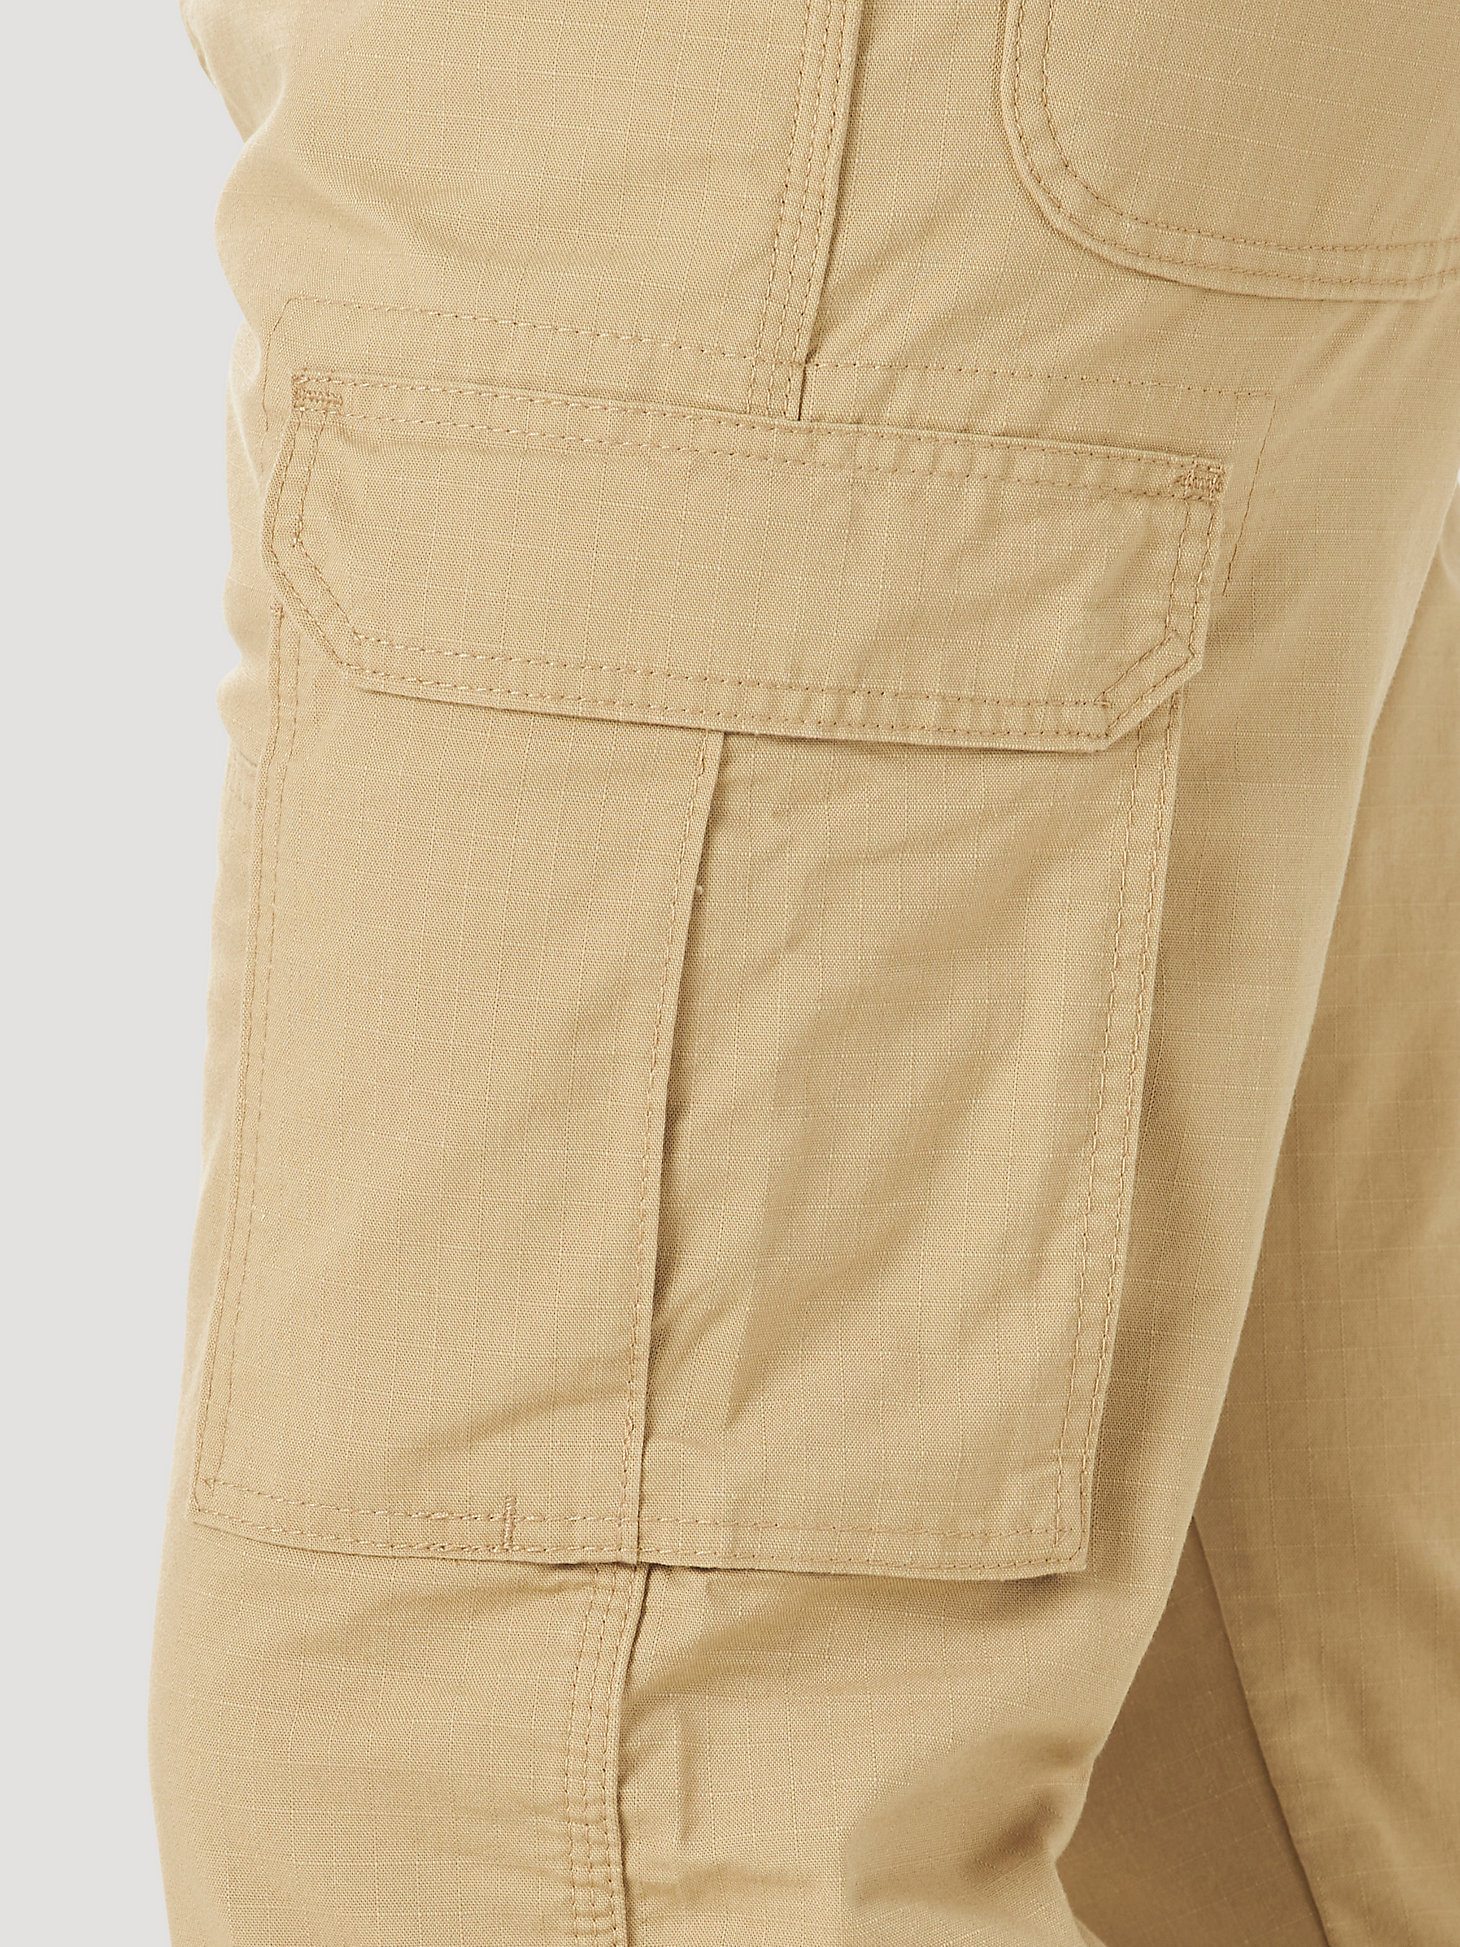 Wrangler® RIGGS Workwear® Comfort Flex Ripstop Ranger Cargo Pant in Golden Khaki alternative view 8